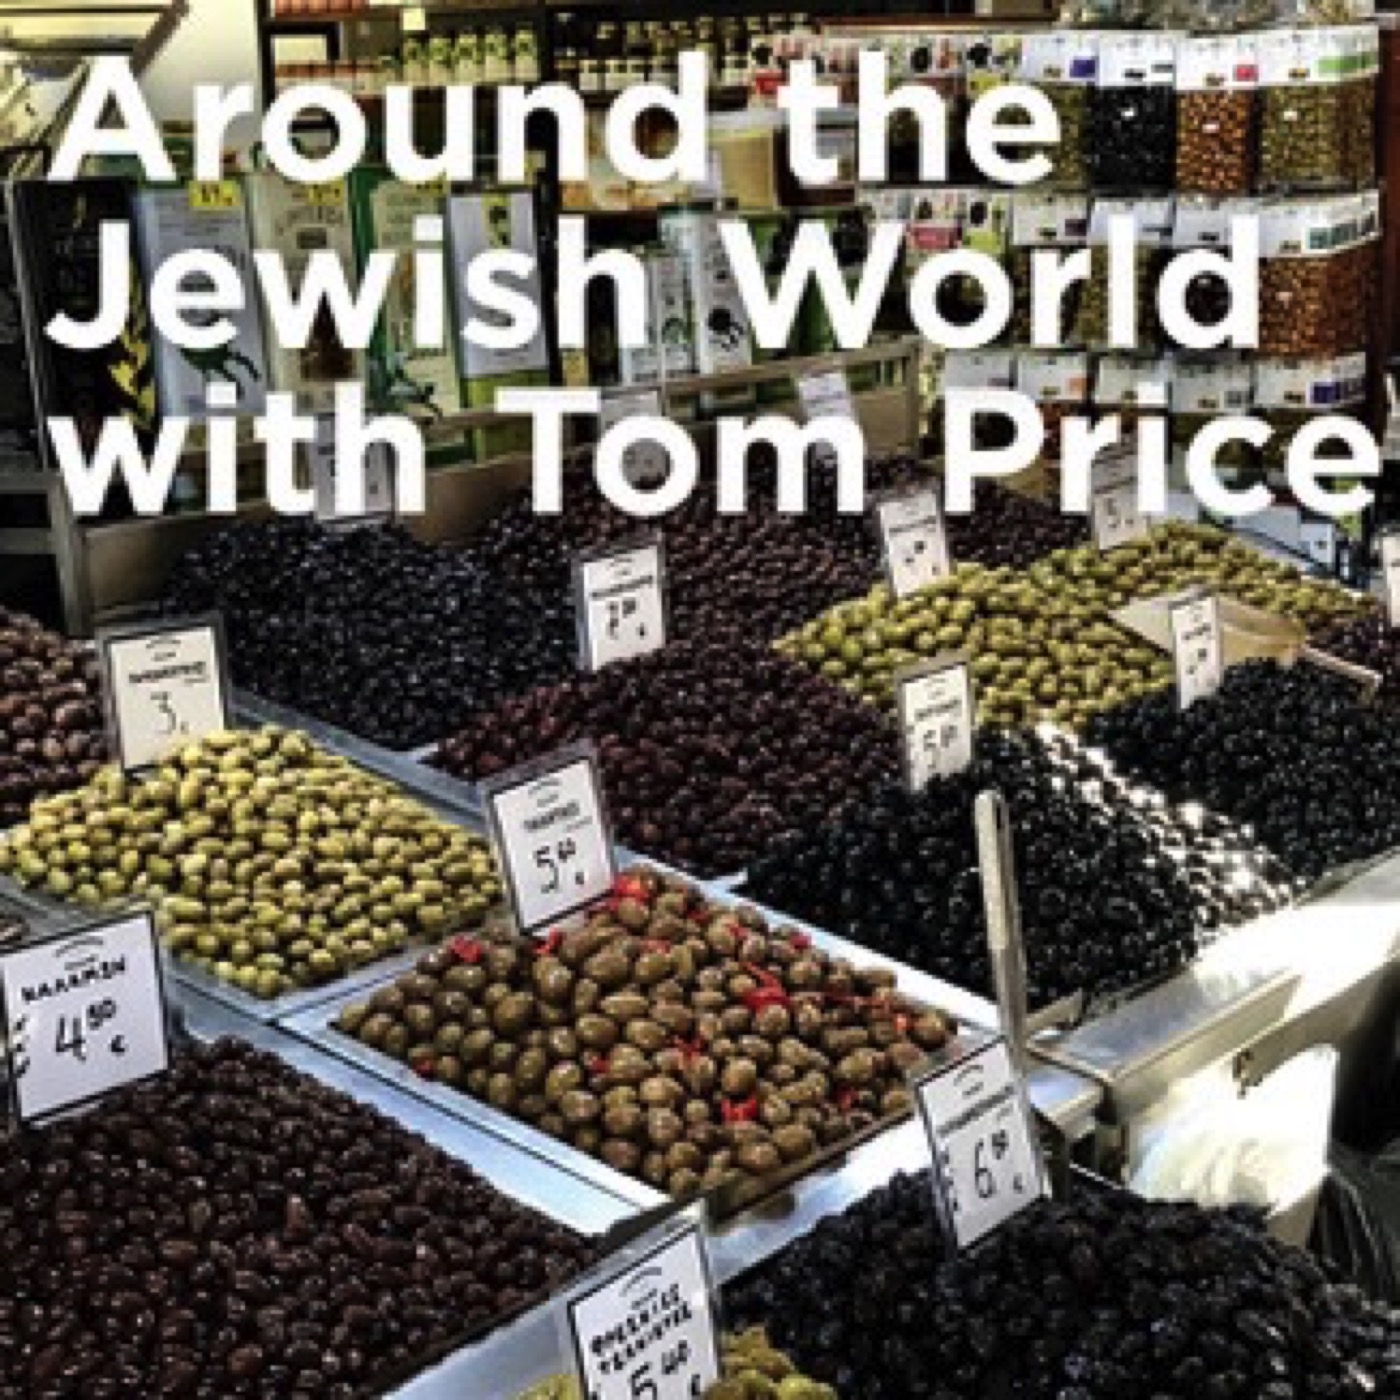 Around the Jewish World with Tom Price